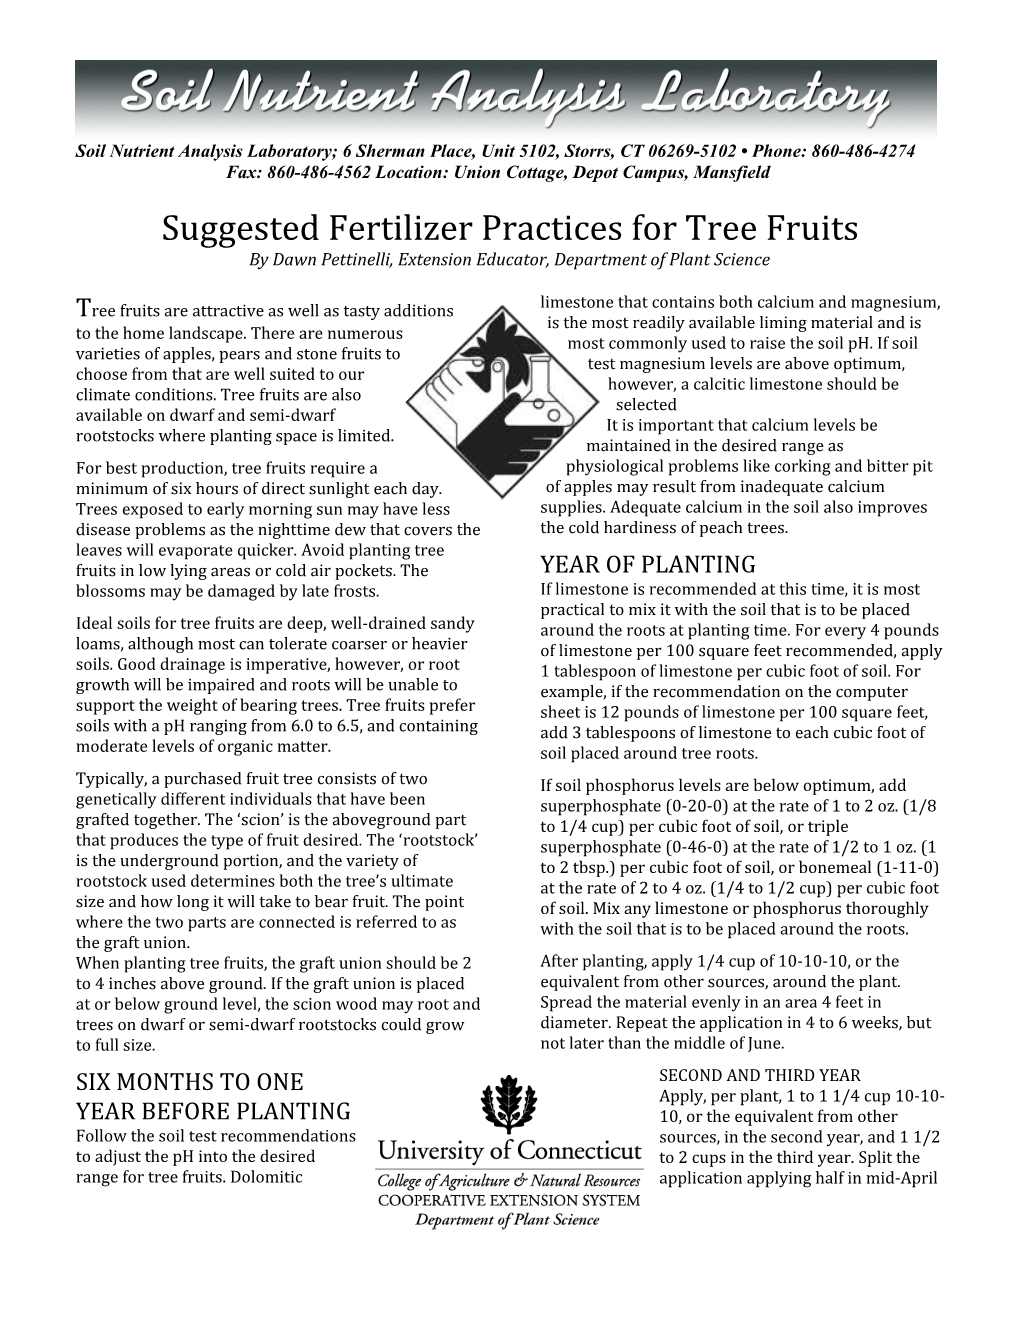 Suggested Fertilizer Practices For Vegetables